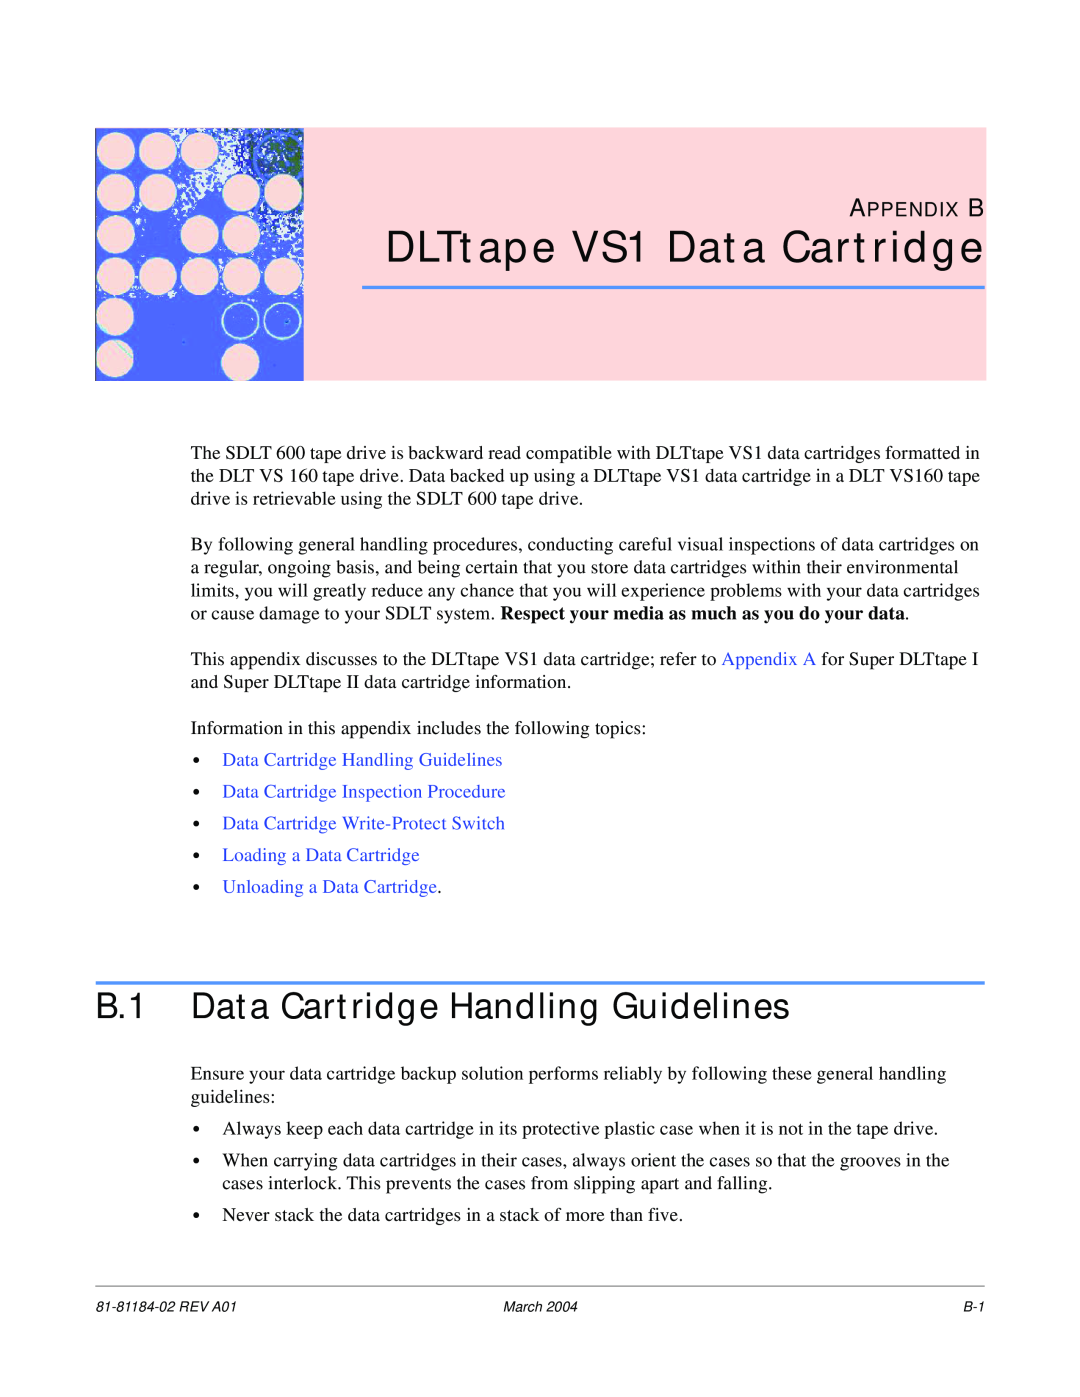 Tandberg Data 600 manual DLTtape VS1 Data Cartridge, B.1 Data Cartridge Handling Guidelines, Appendix B 